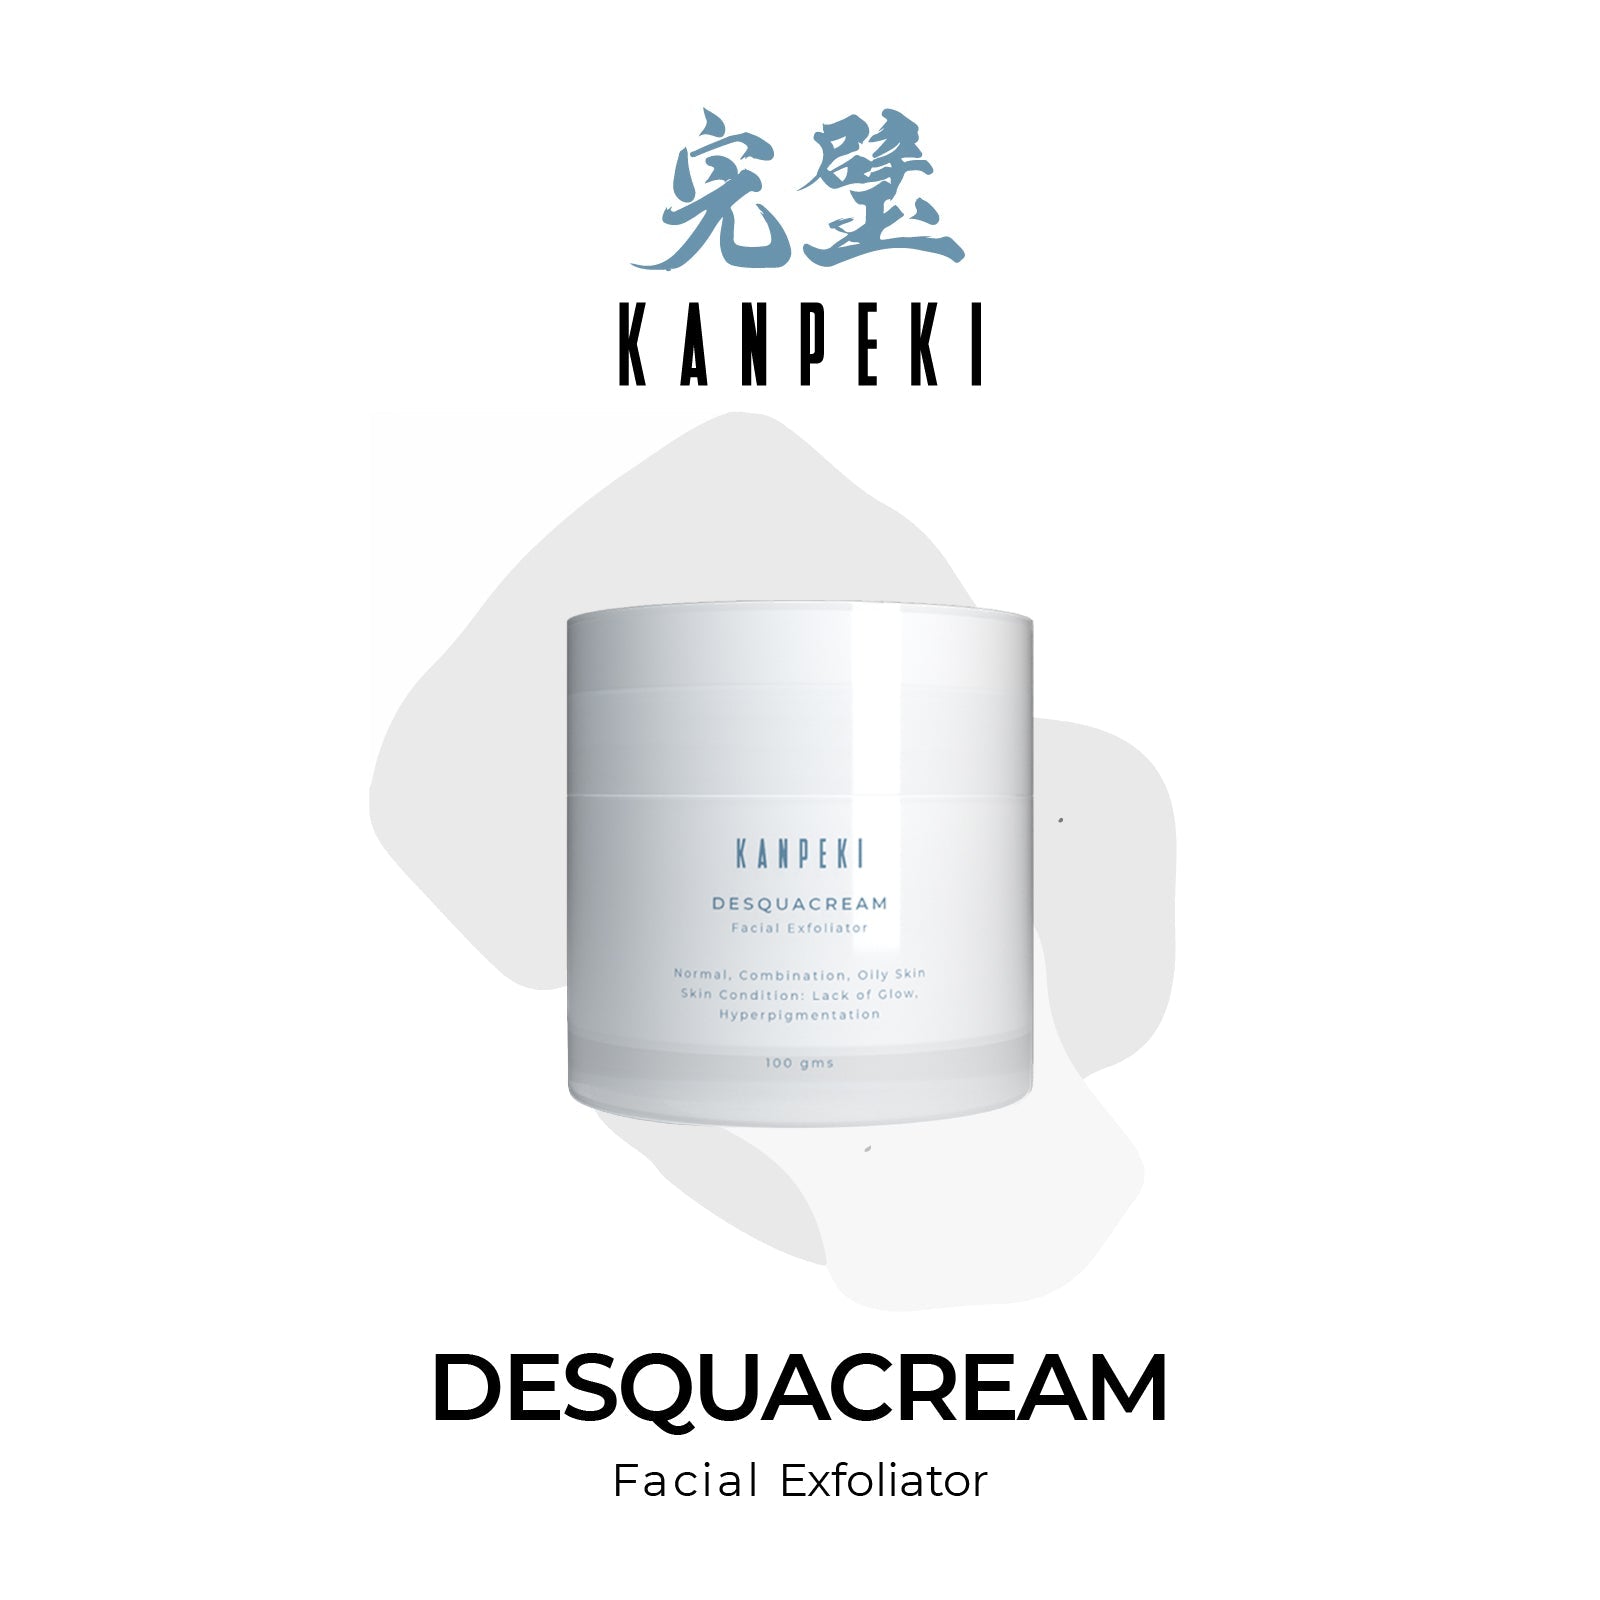 Desquacream - Kanpeki Skincare